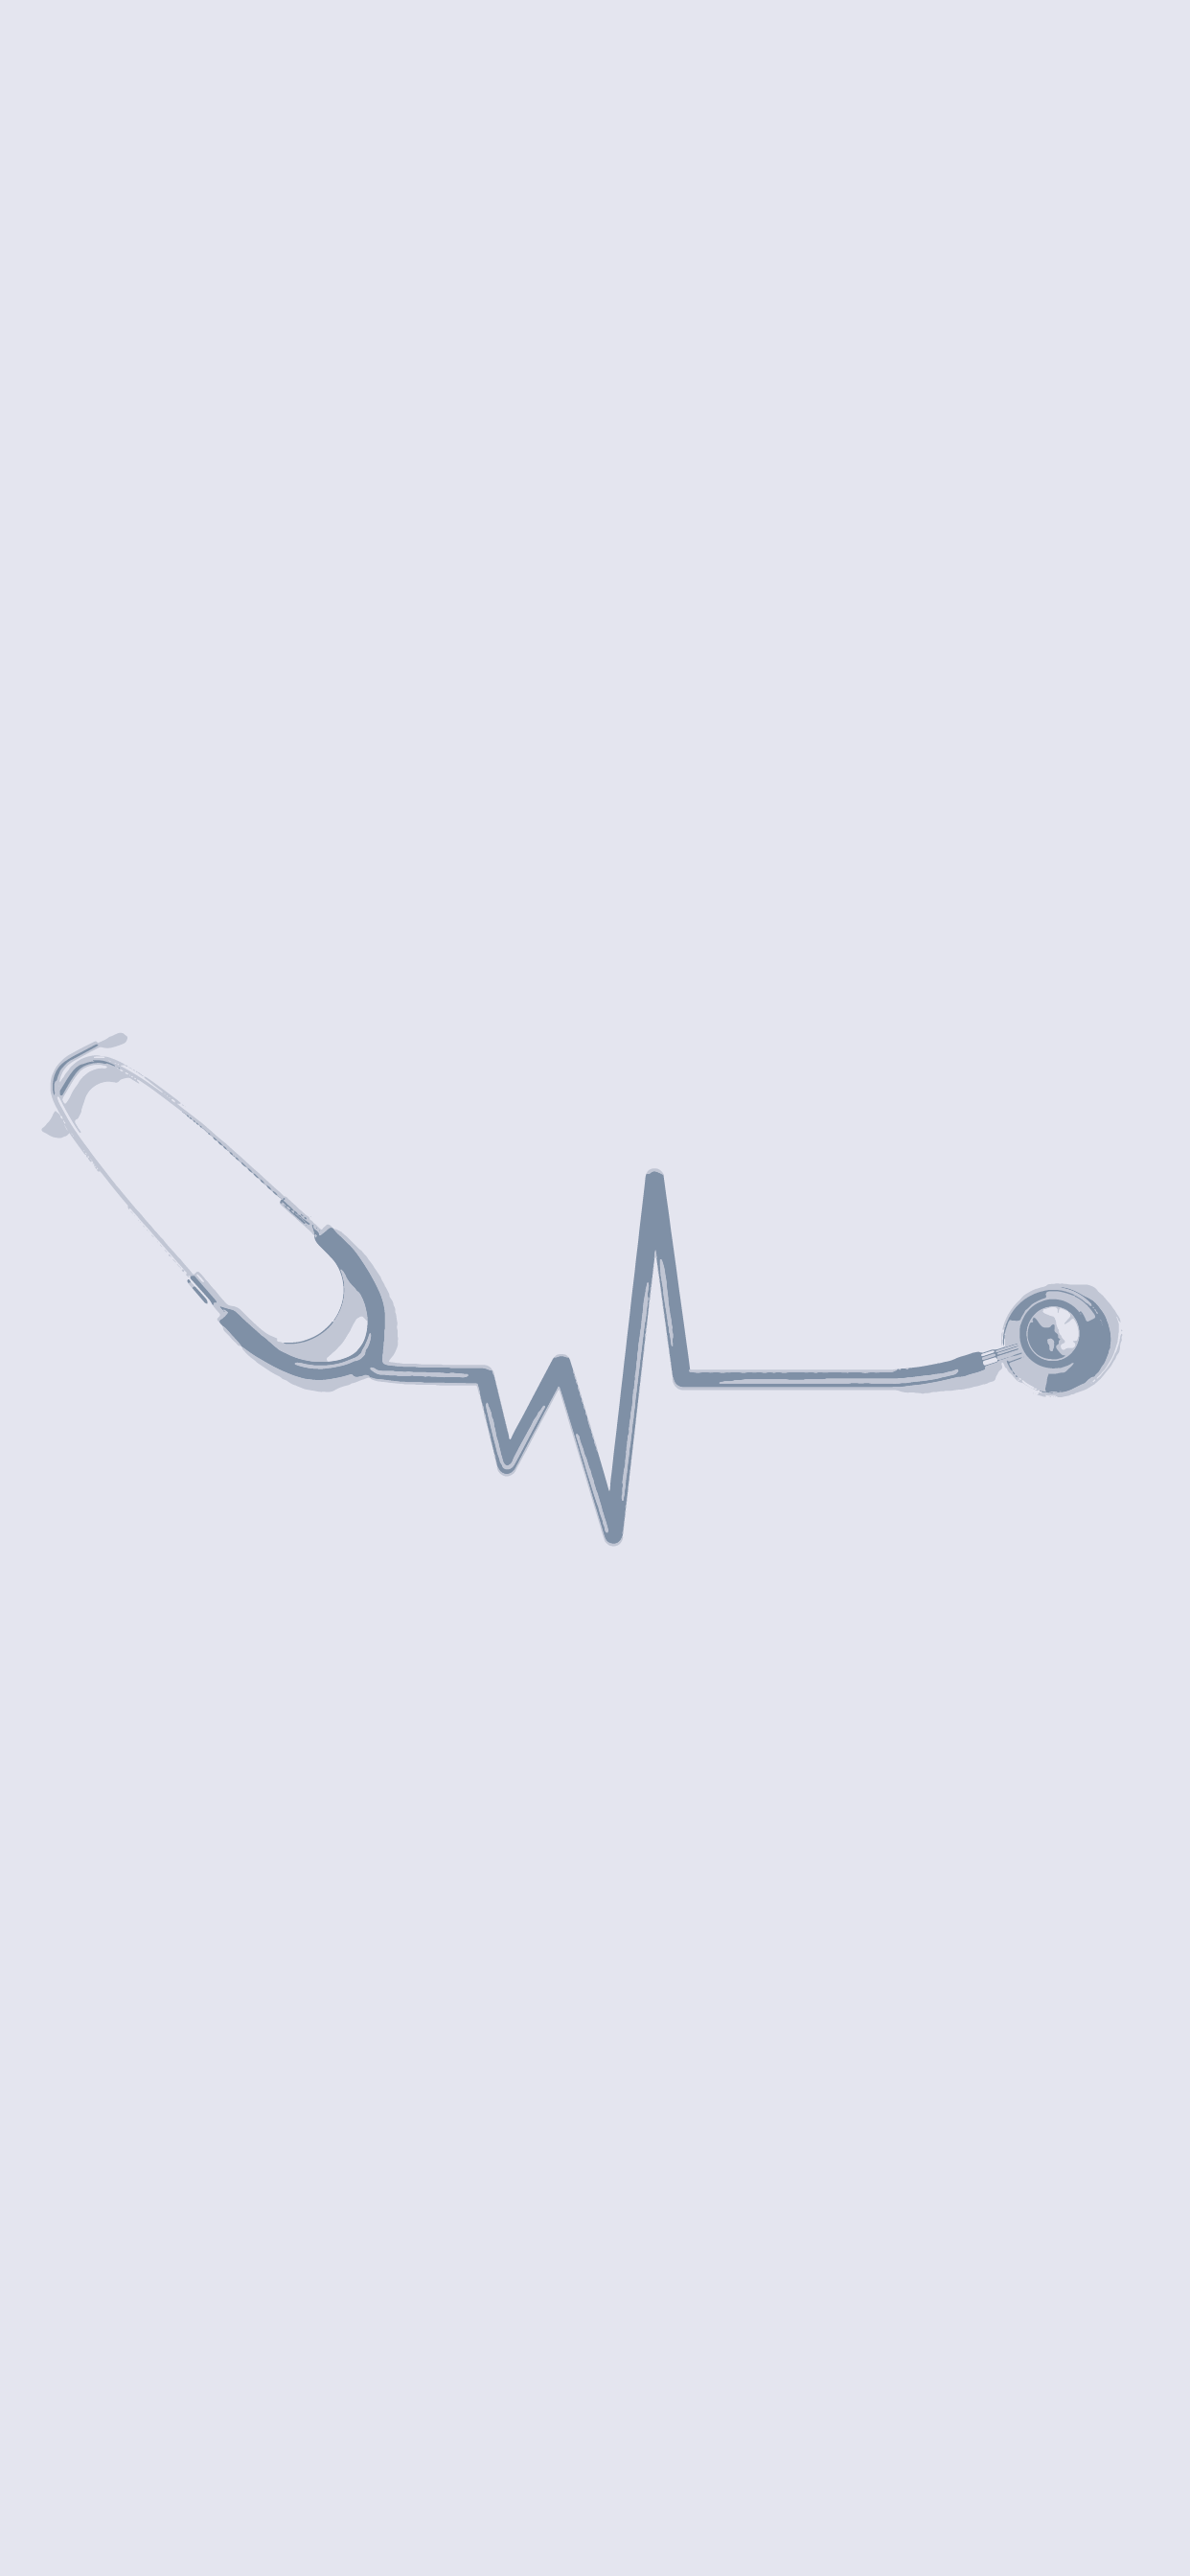 A stethoscope with an ekg line - 